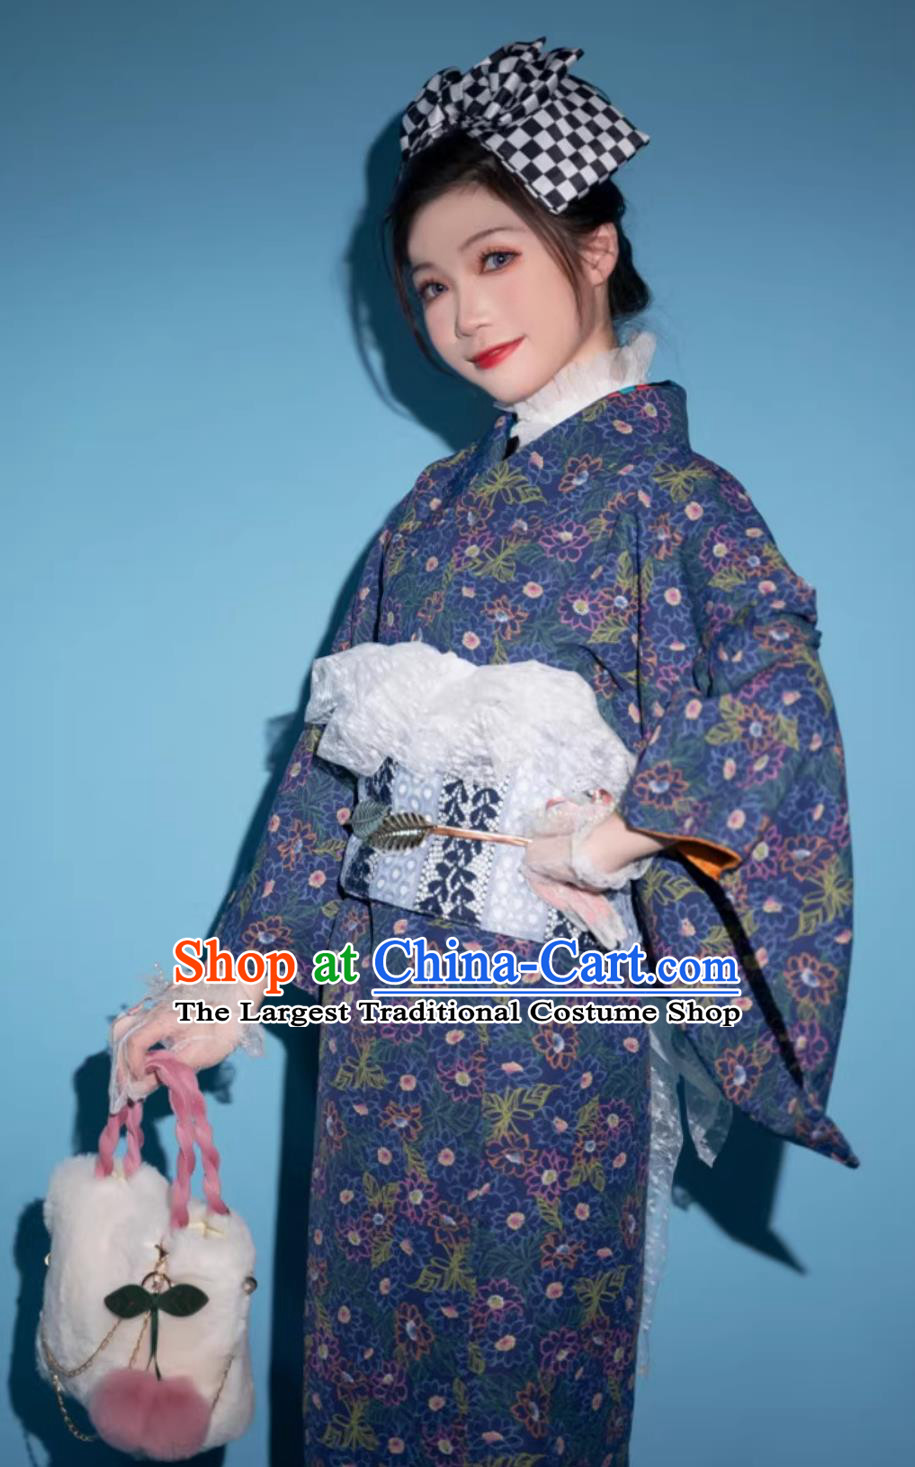 Japanese Women Dress Traditional Costume Formal Attire Floral Kimono